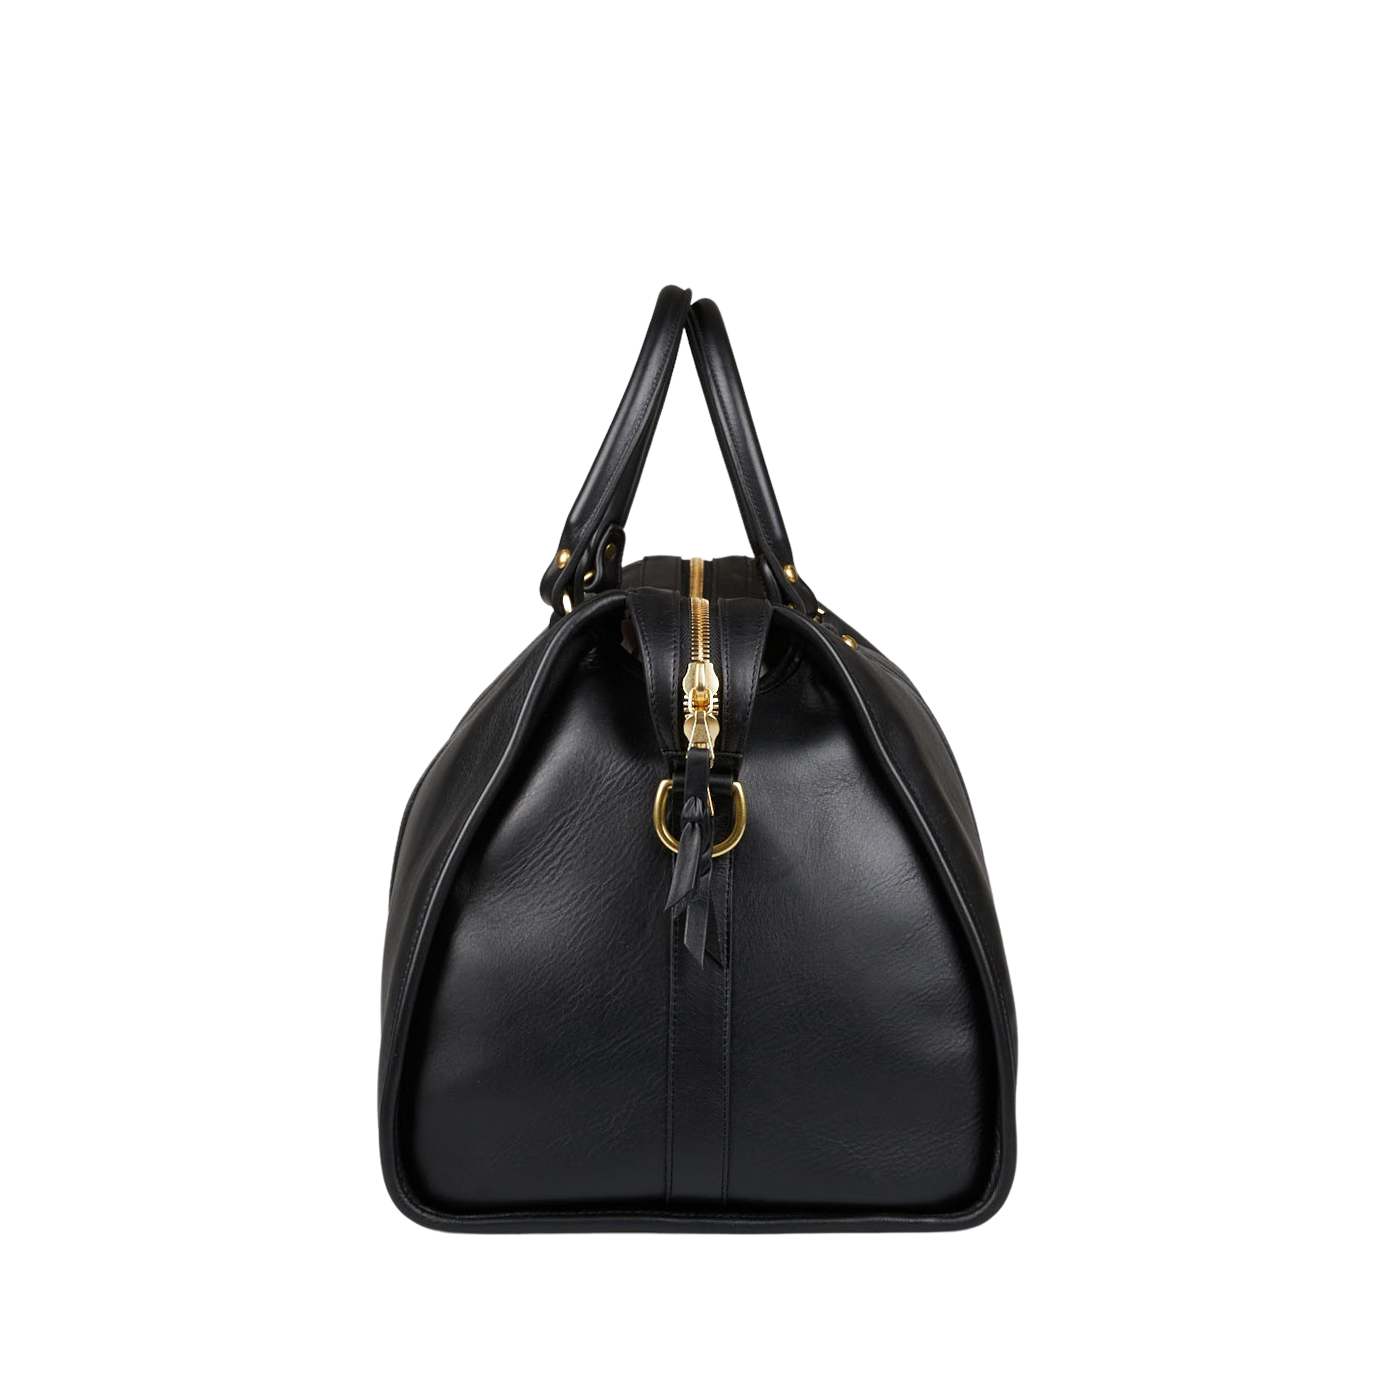 Black Tumbled Leather Duffle Bag